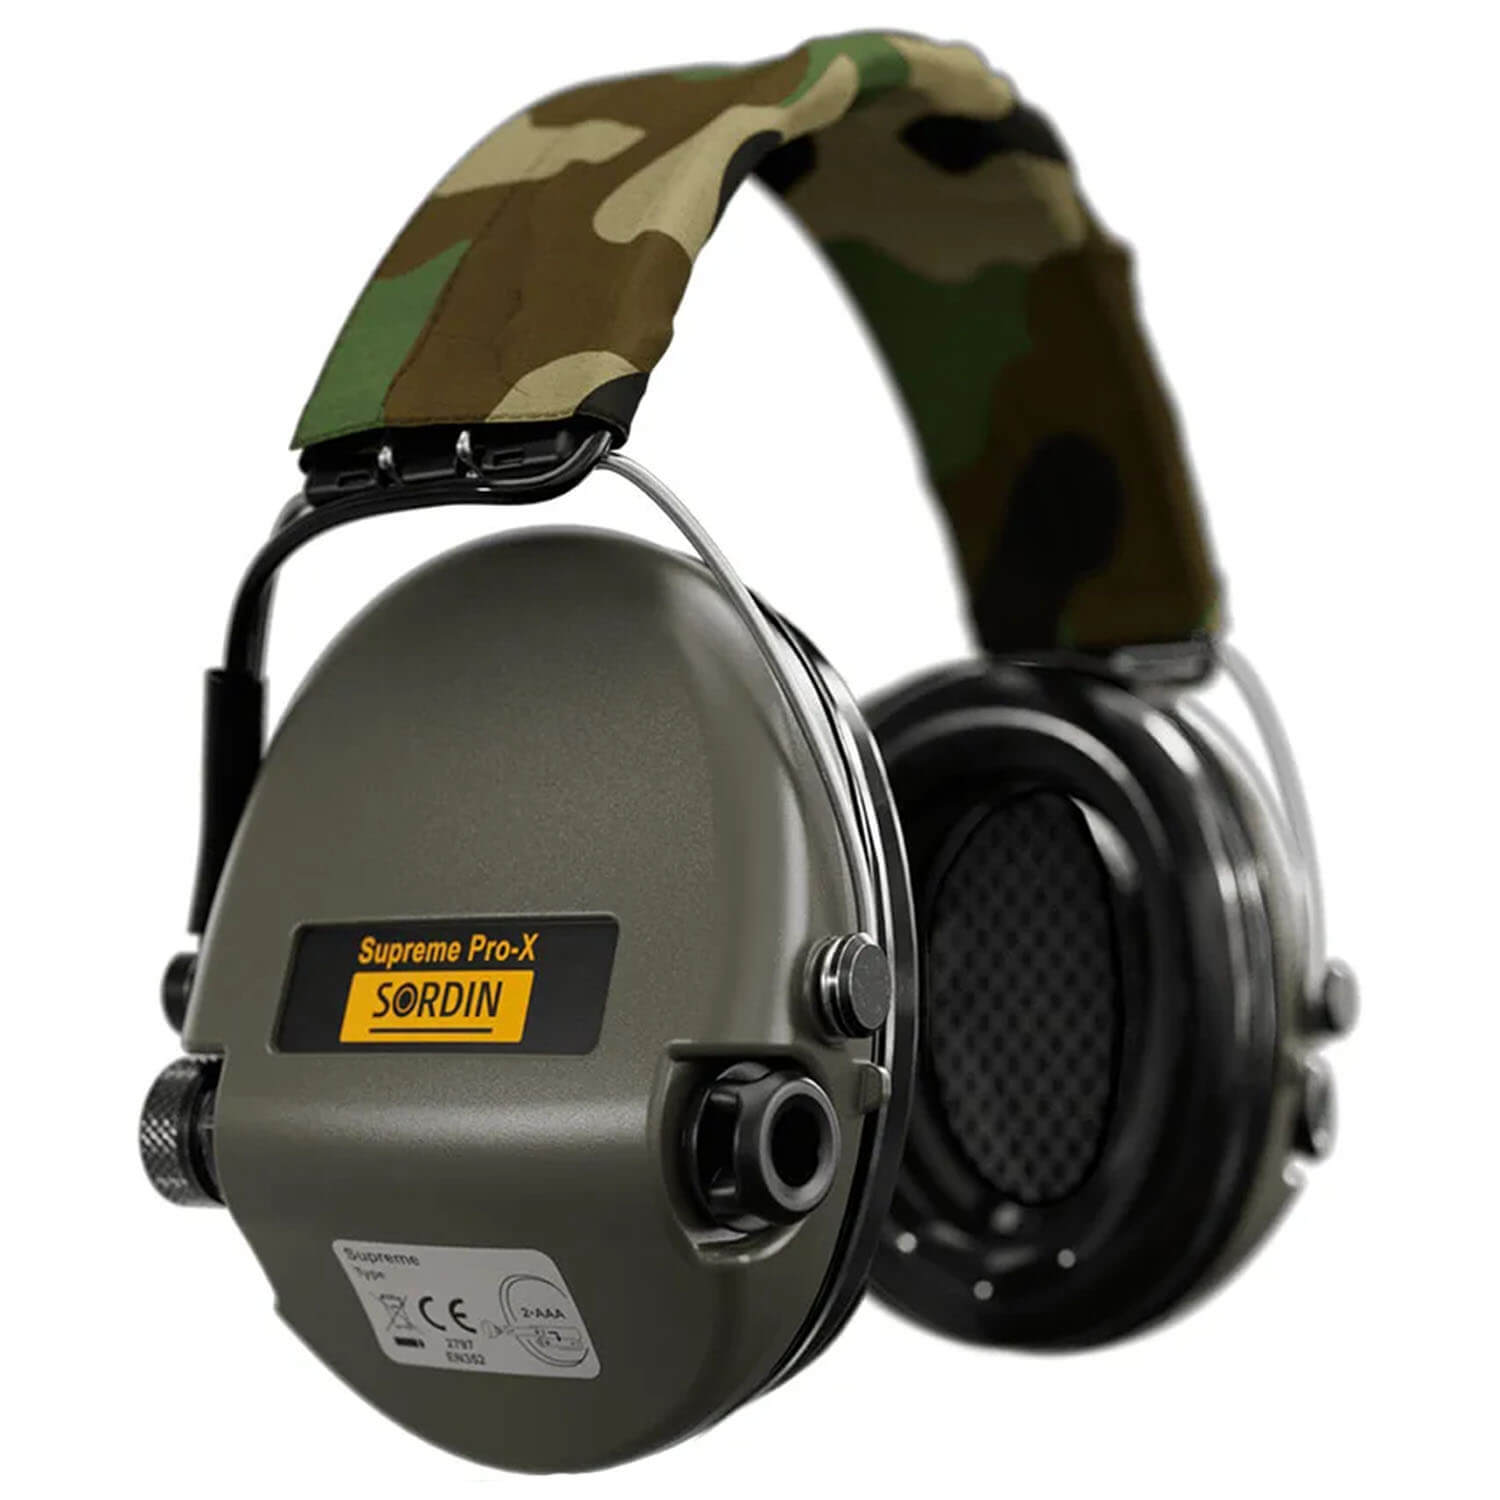 Sordin Ear Protector Supreme Pro X (camo) - Ear Protection